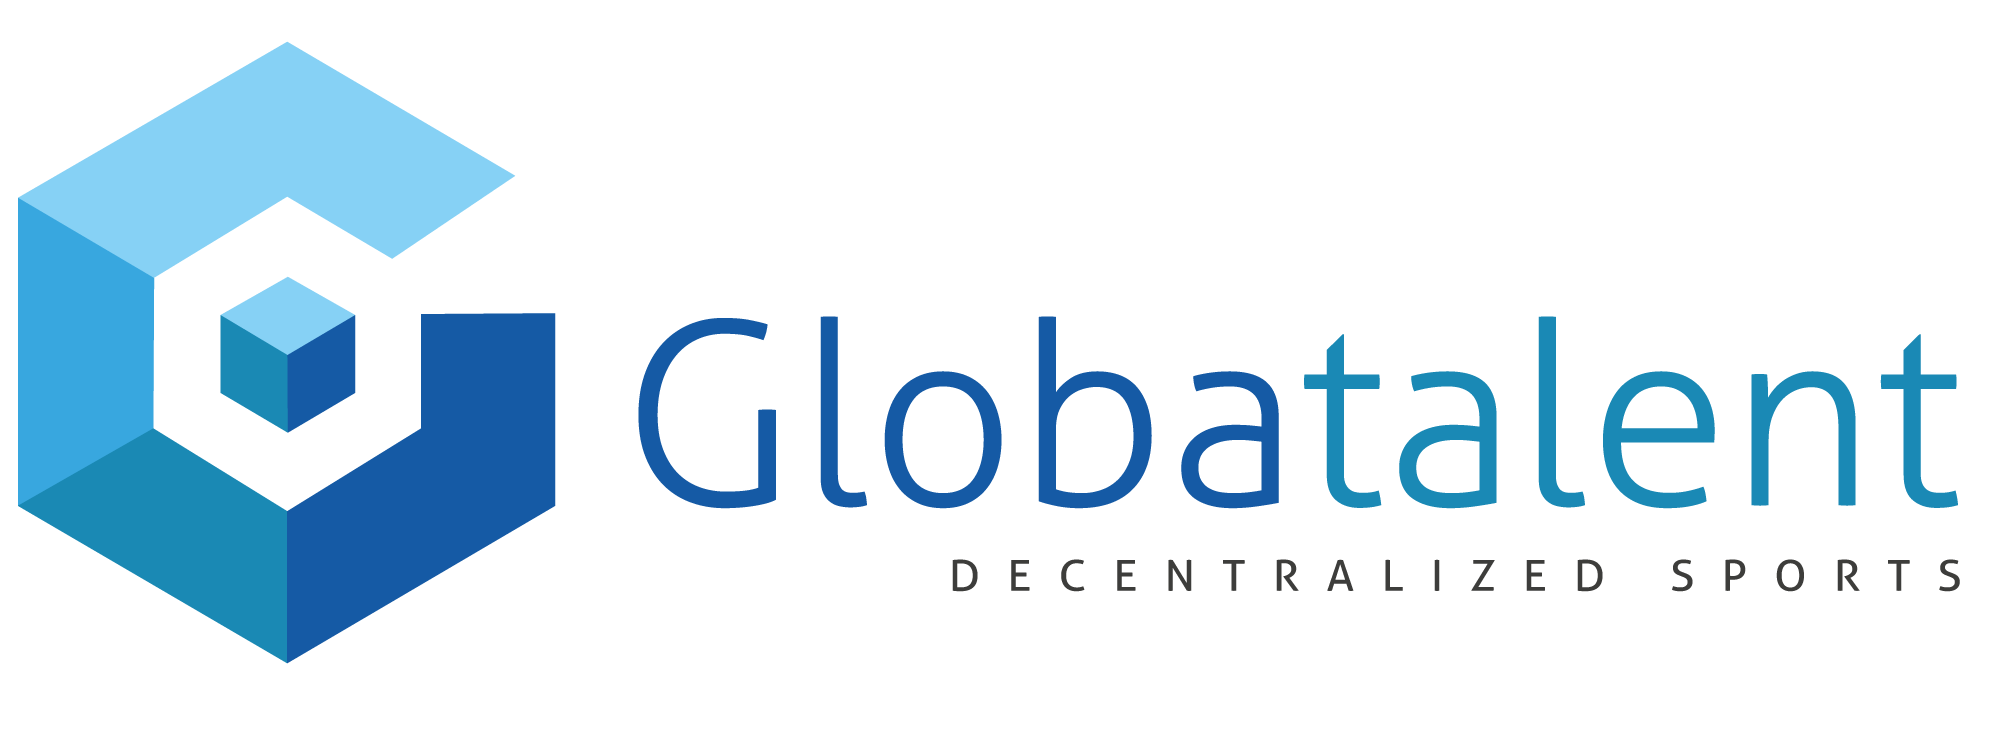 Globatalent-logo-vert.png